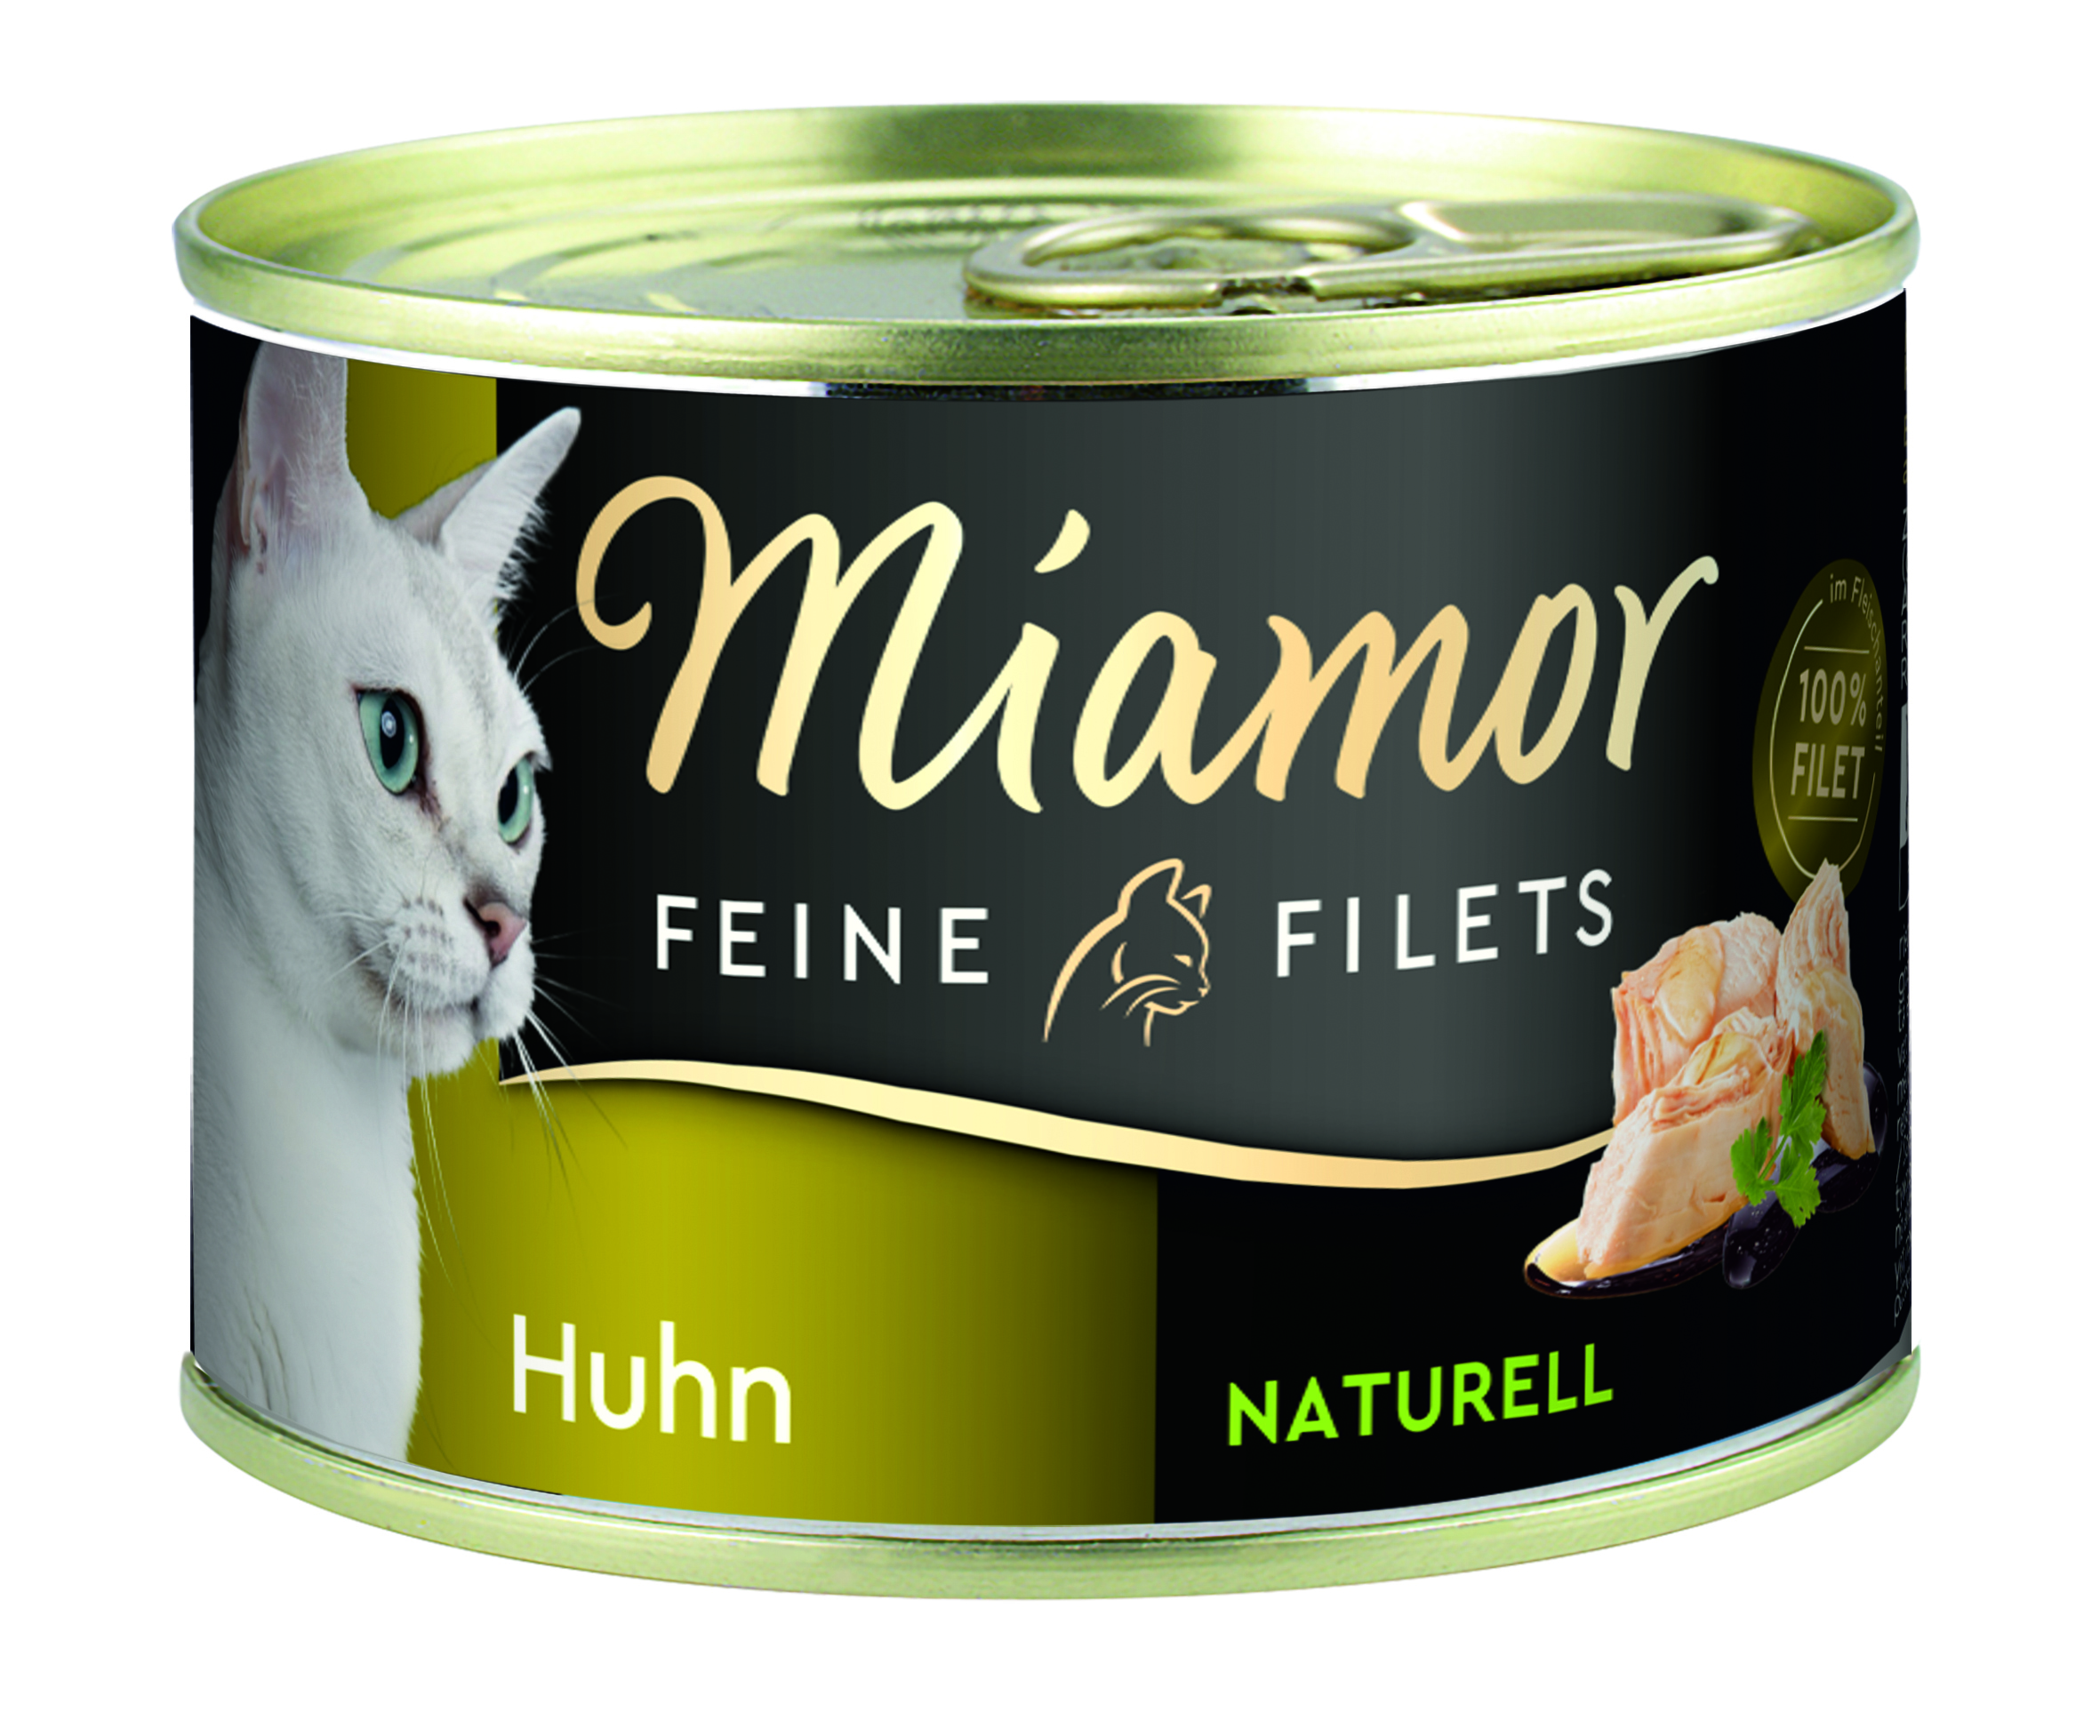 Miamor Feine Filets Naturell Huhn 156g Dose